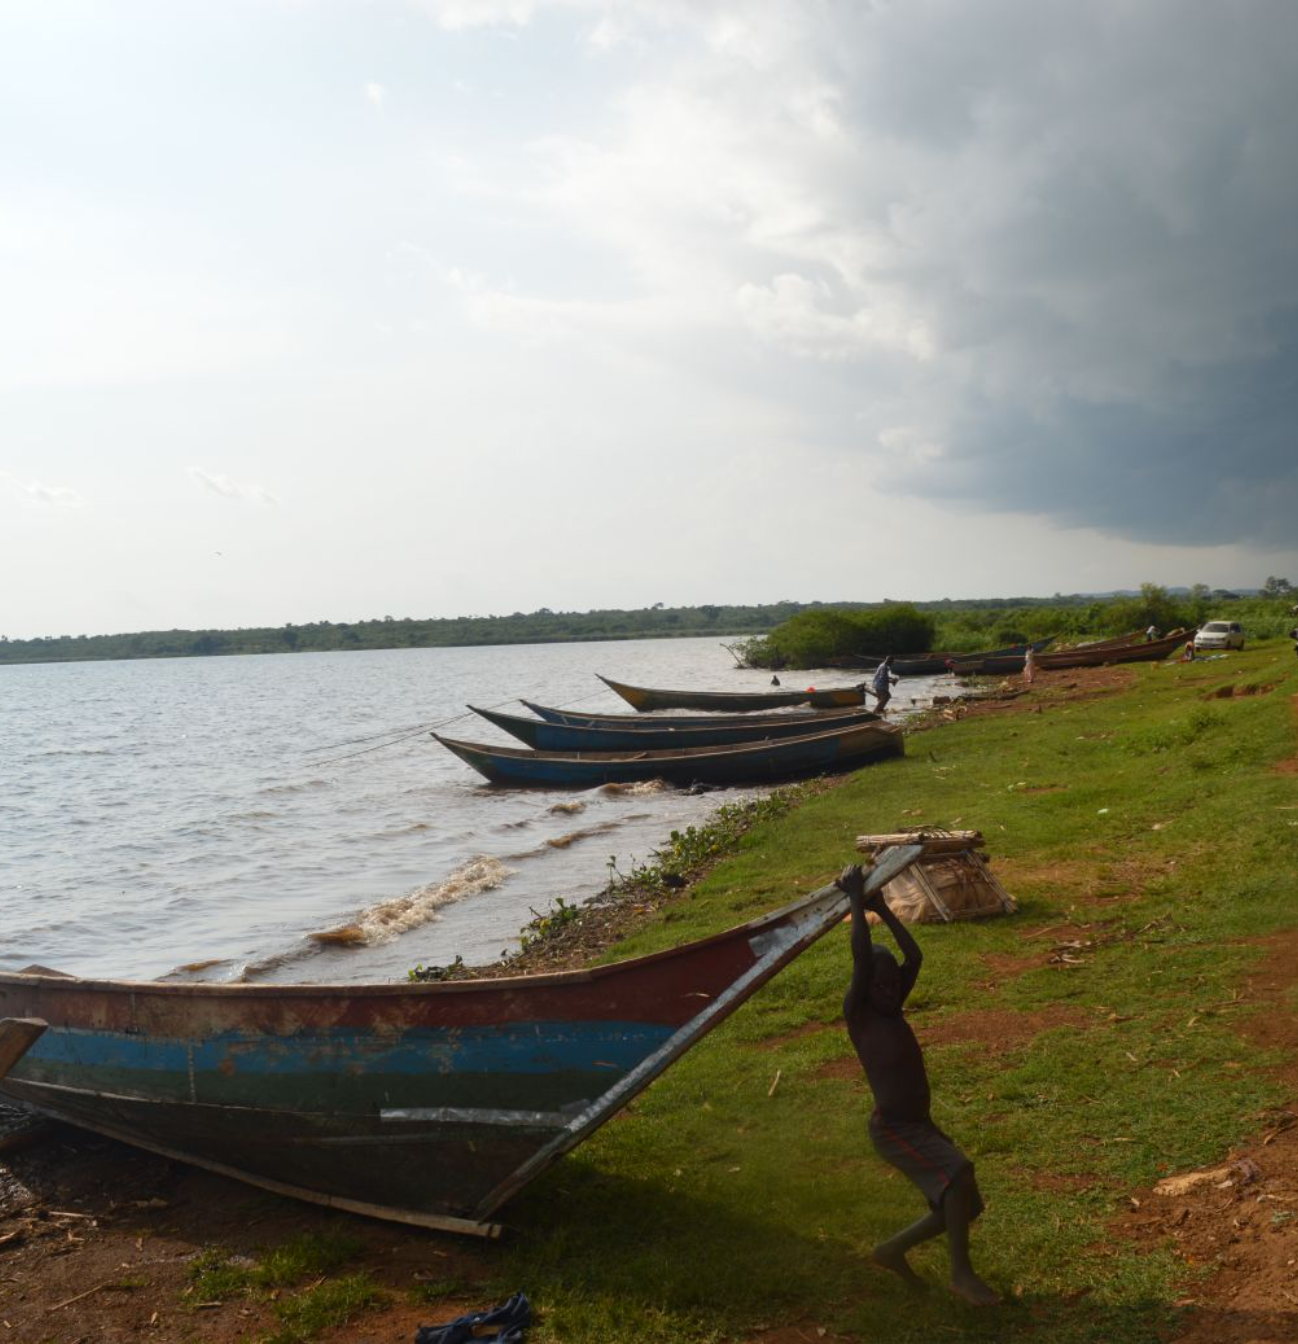 Image by Annika McGinnis. Uganda, 2019.